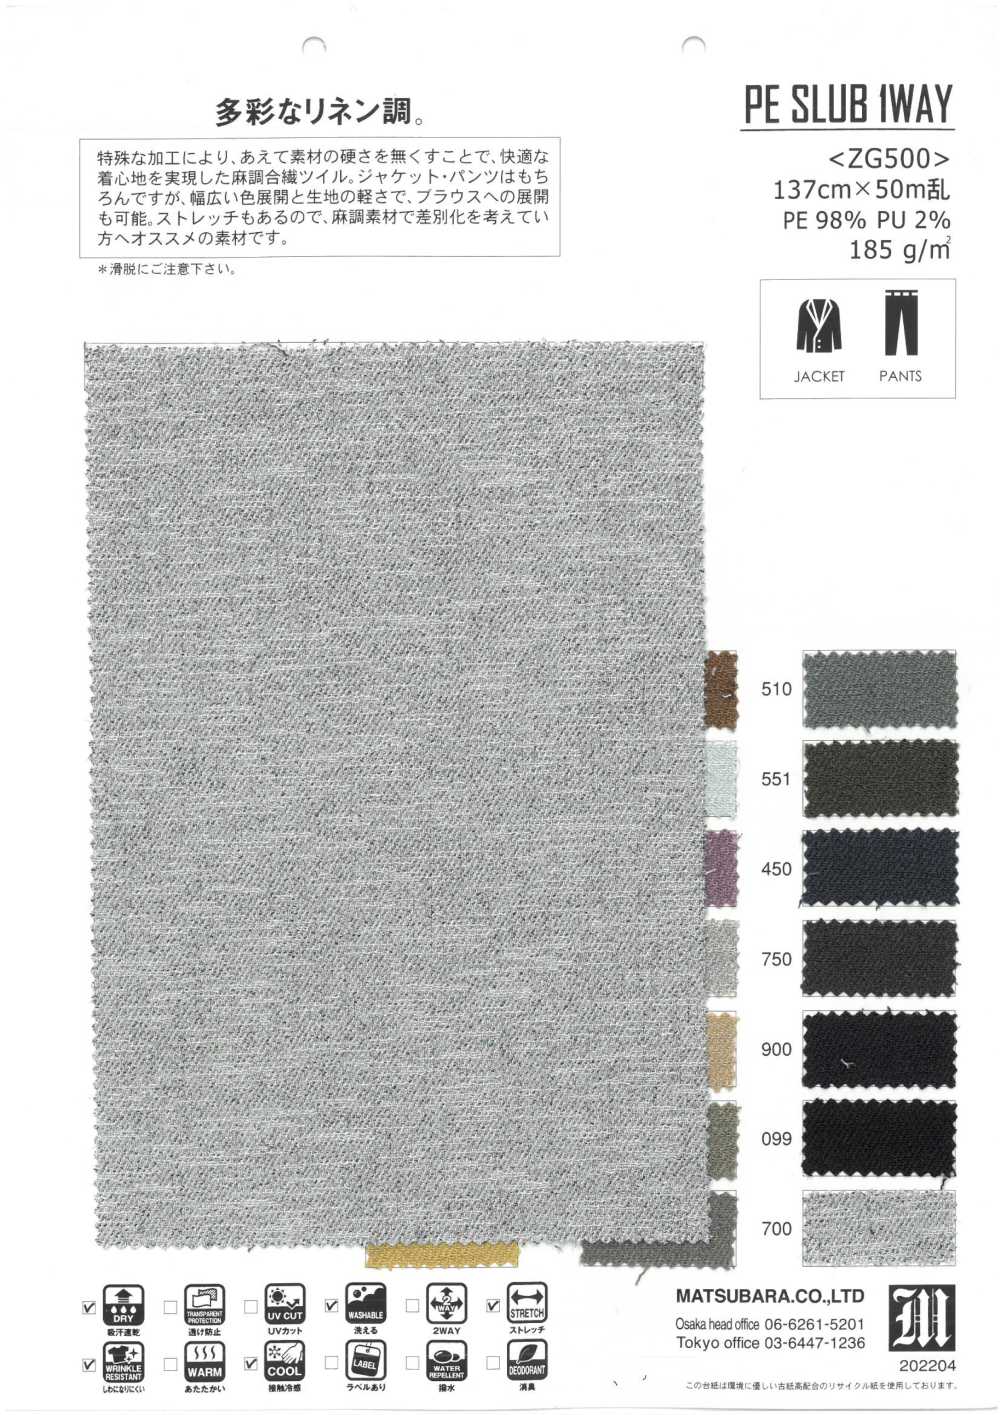 ZG500 PE SLUB 1WAY[Têxtil / Tecido] Matsubara